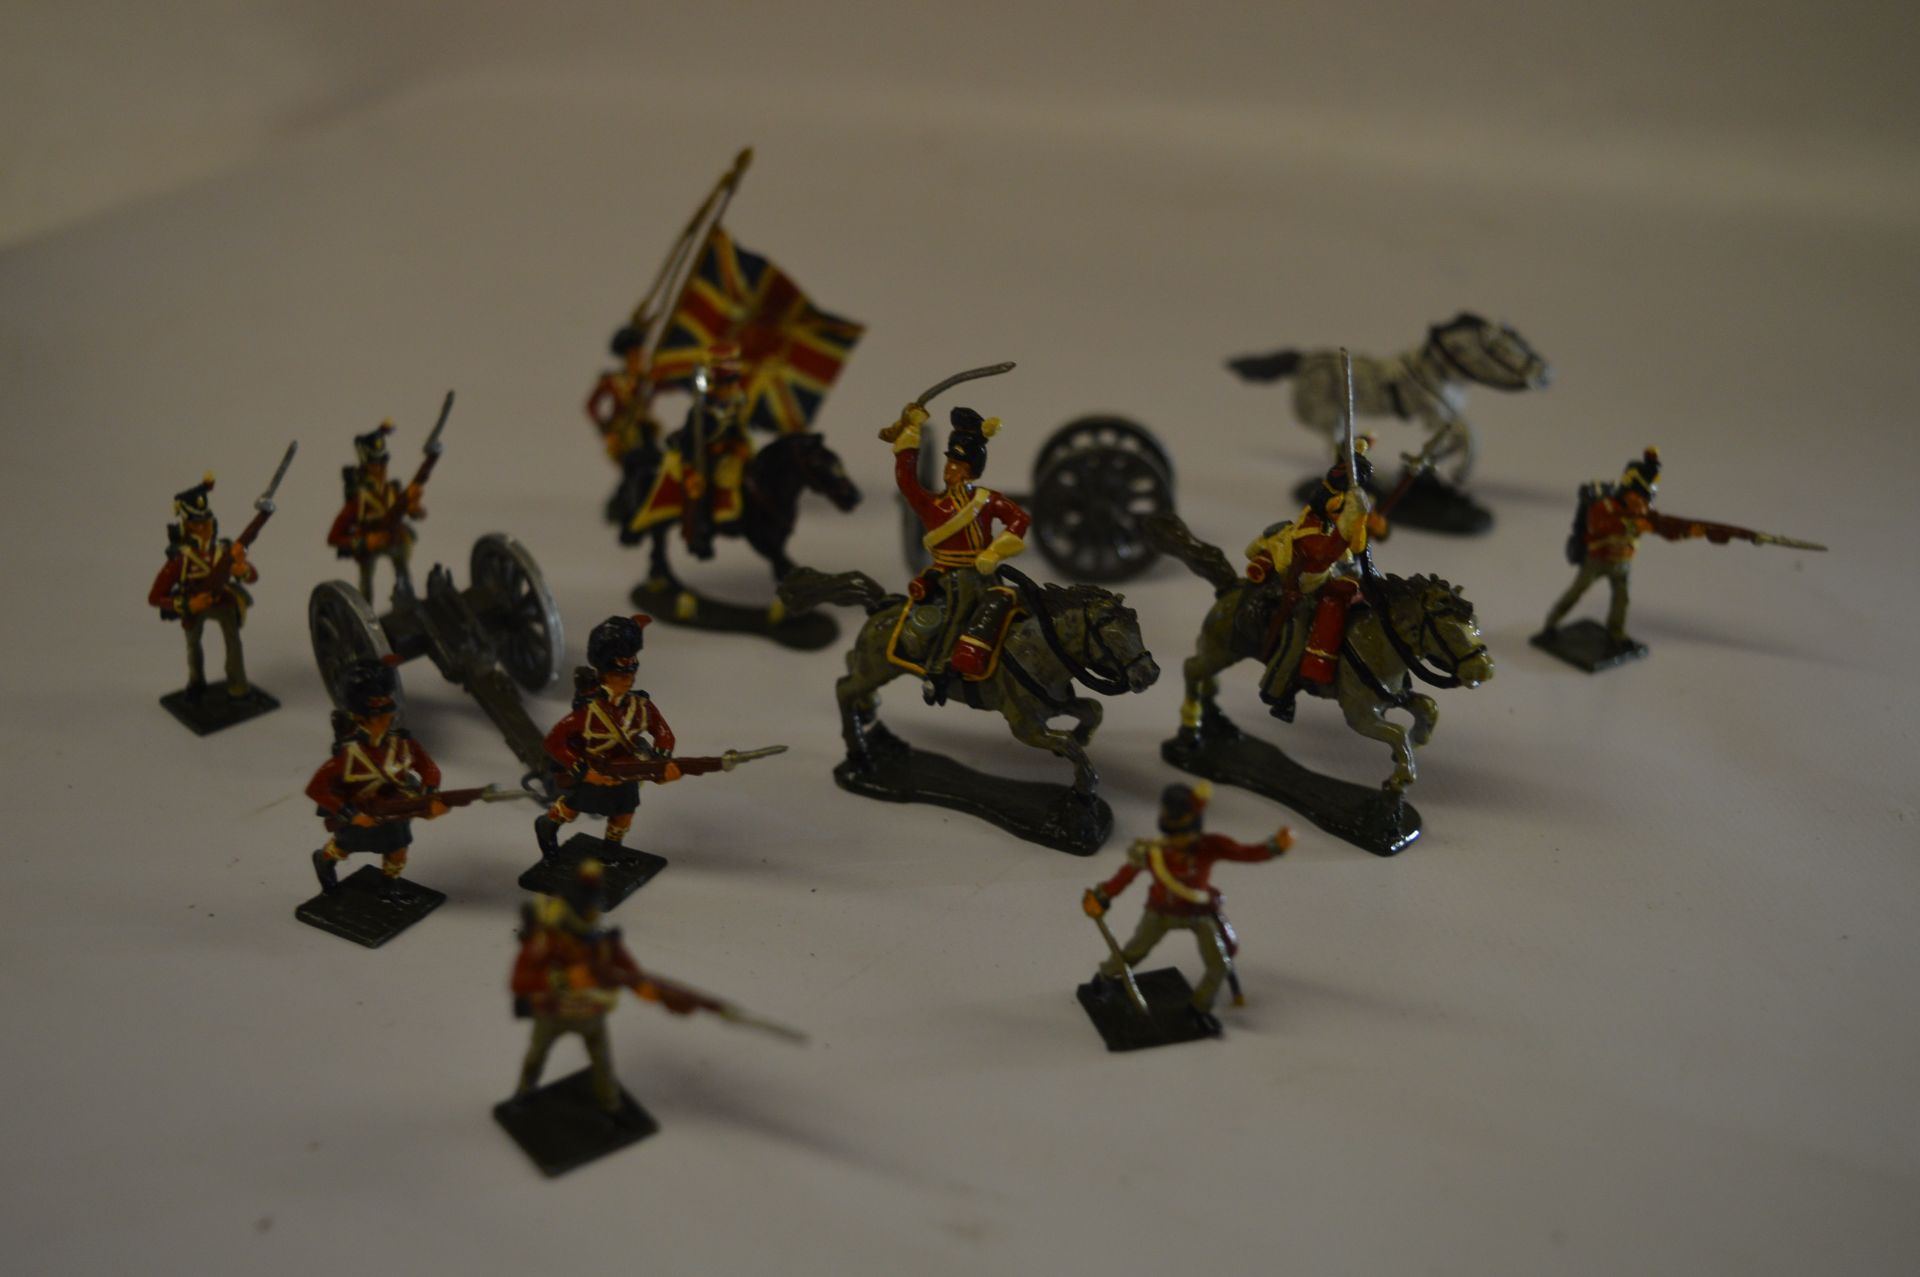 Diecast Figures "British Light Infantry" Napoleonic